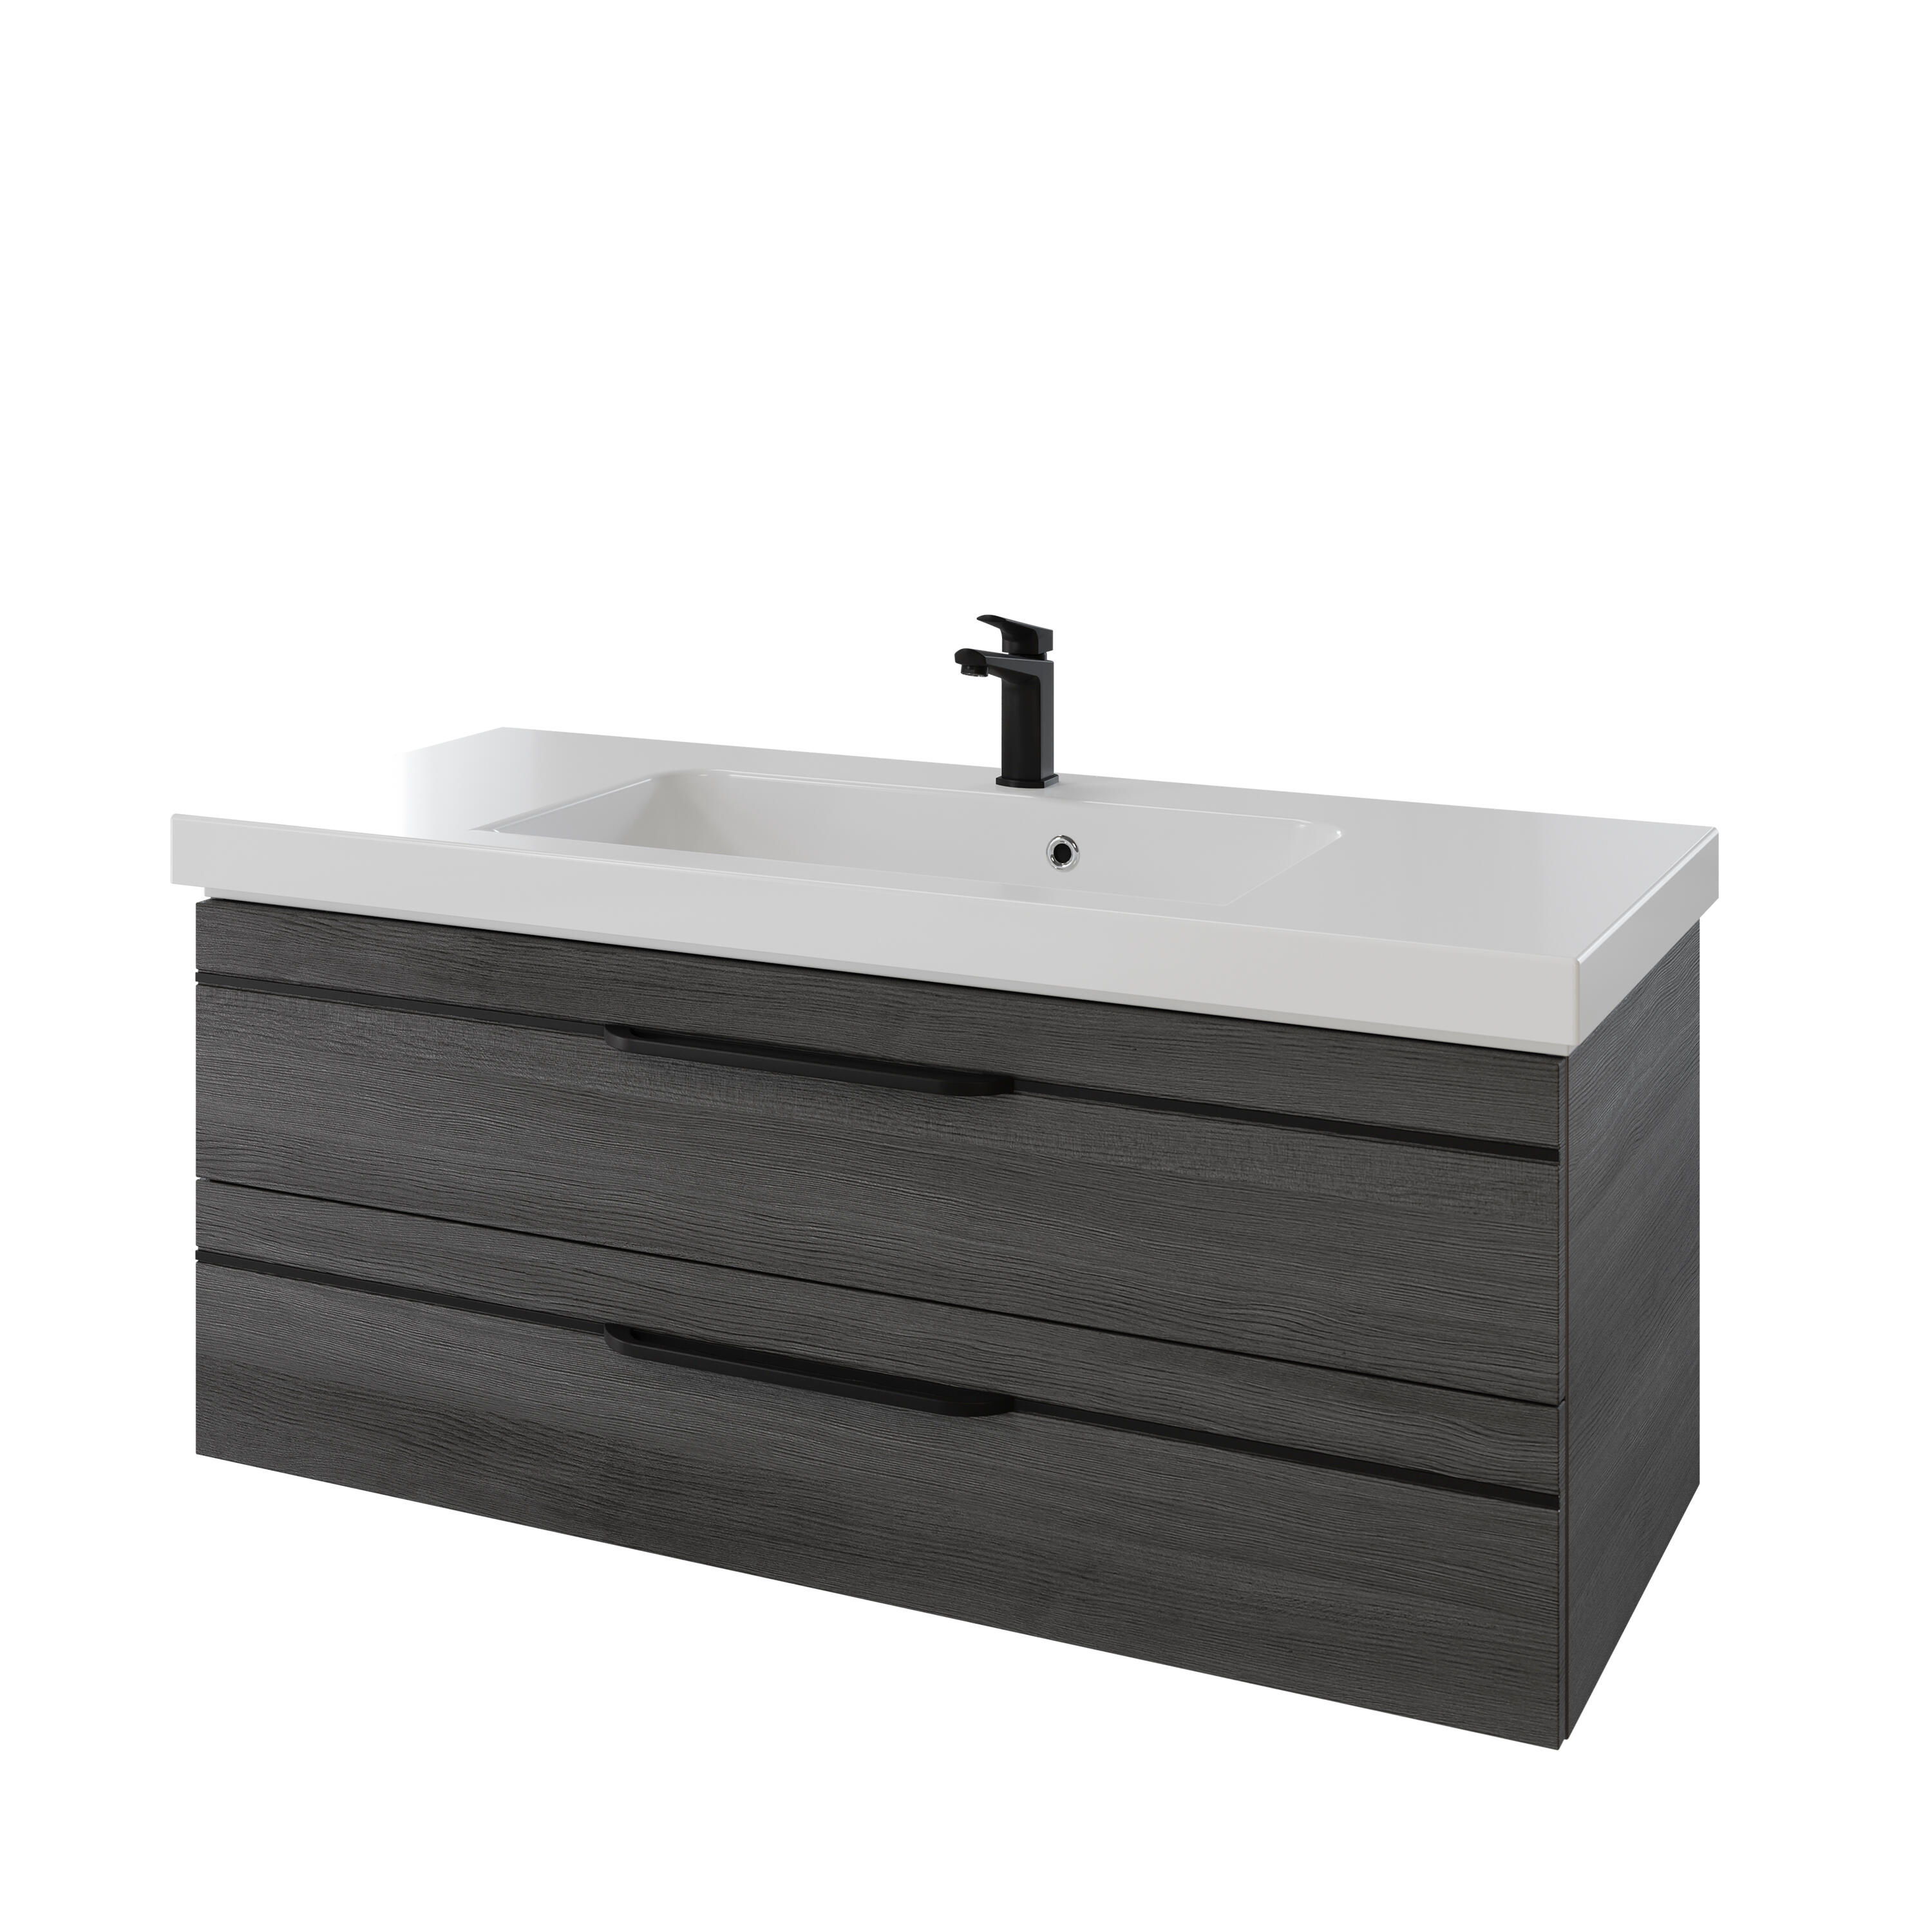 Mueble de baño con lavabo balto grafito brillante 120x49 cm